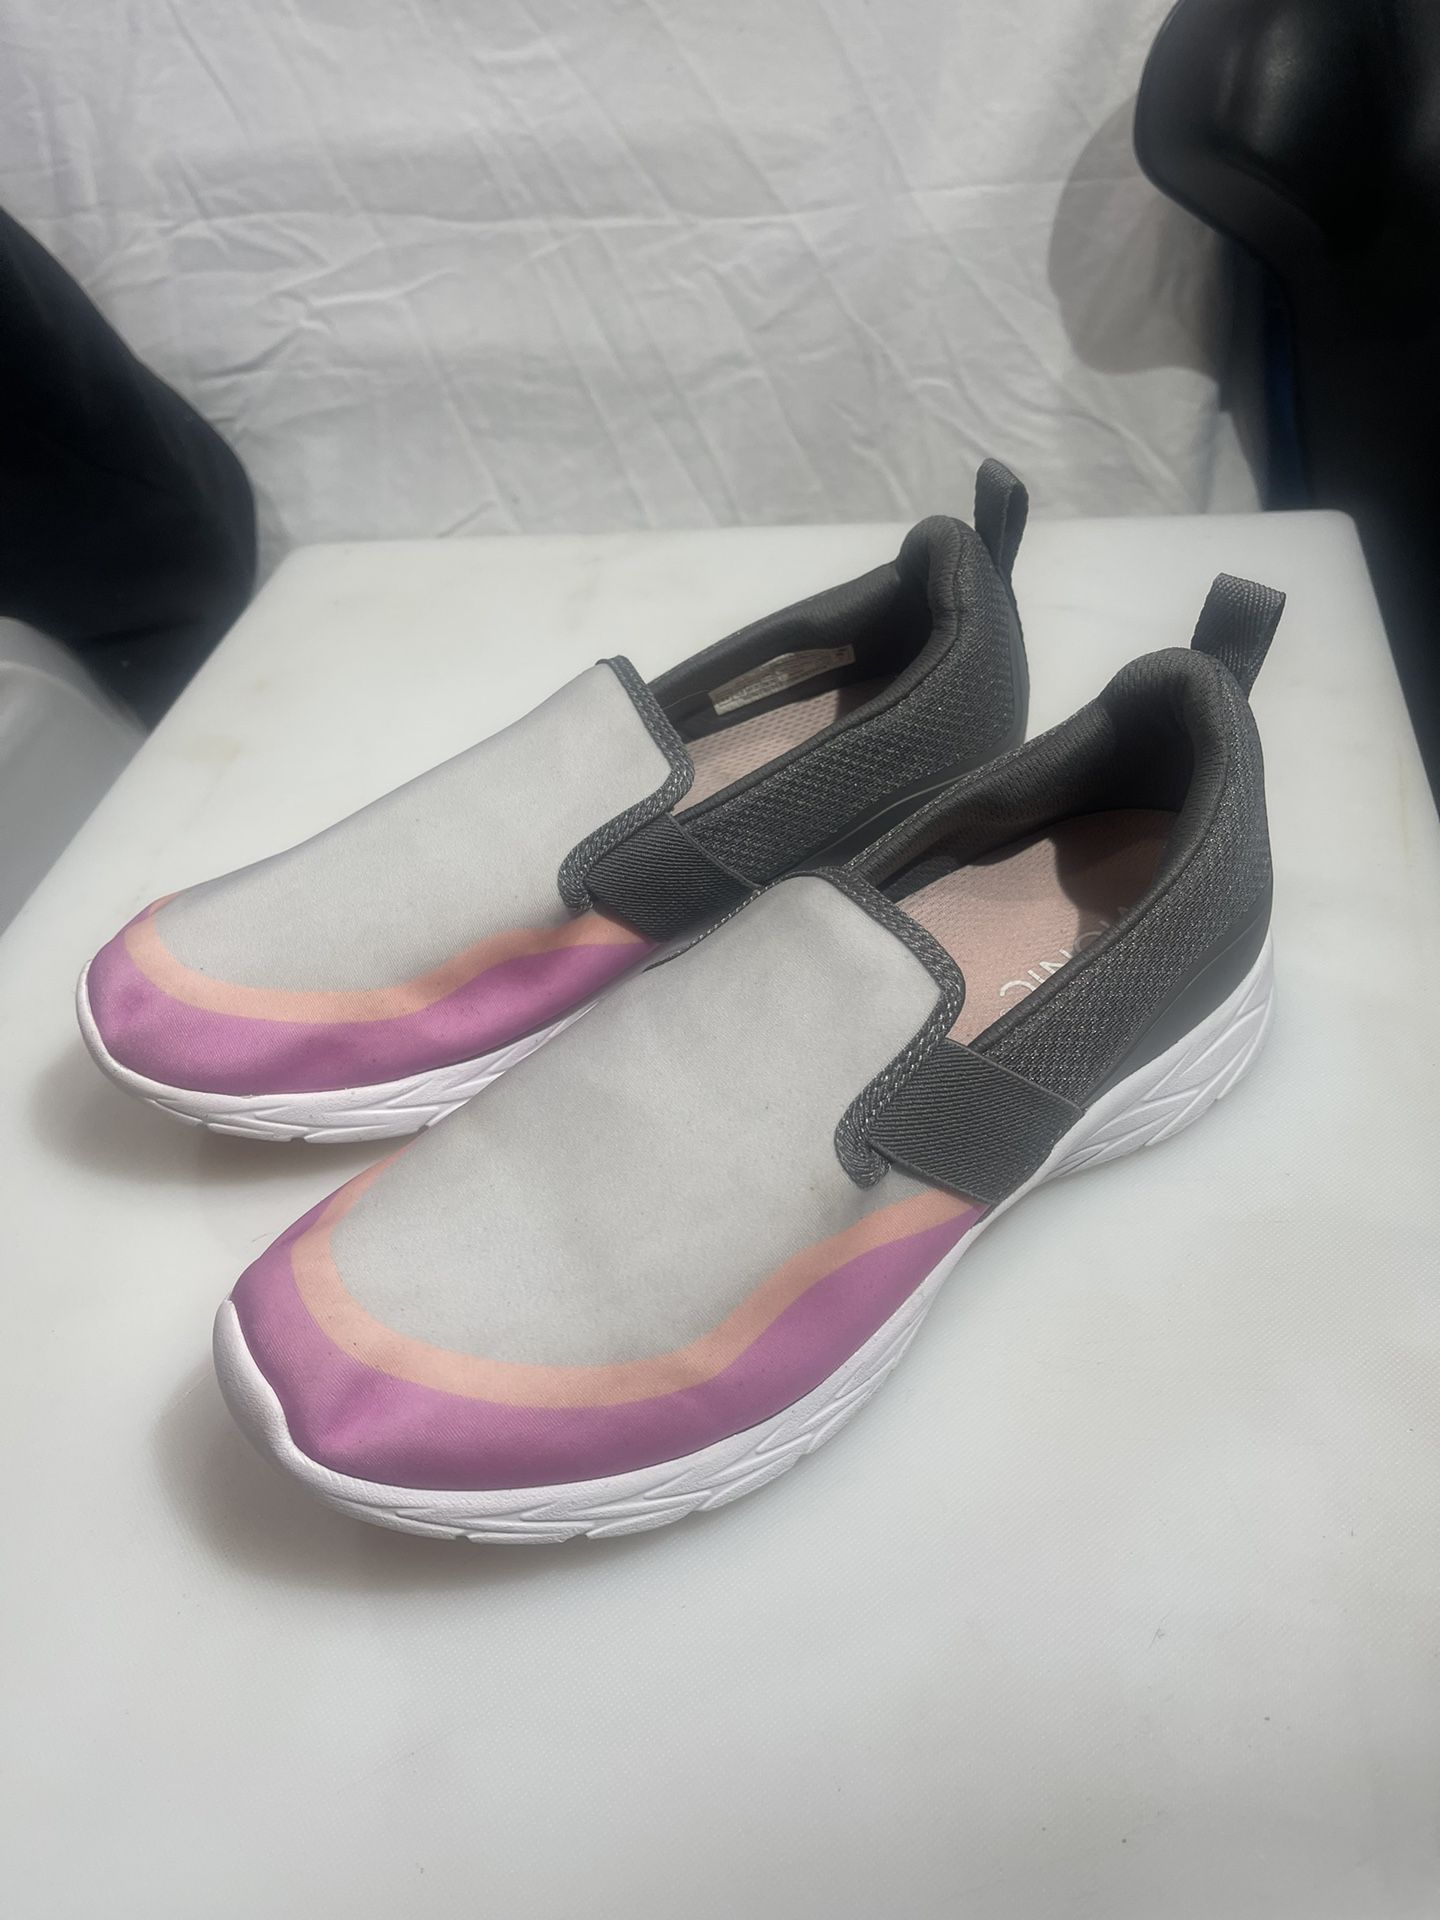 Vionic Brisk Nalia Slip-On Walking Shoes Women's Grey Pink Size 9.5 Wide